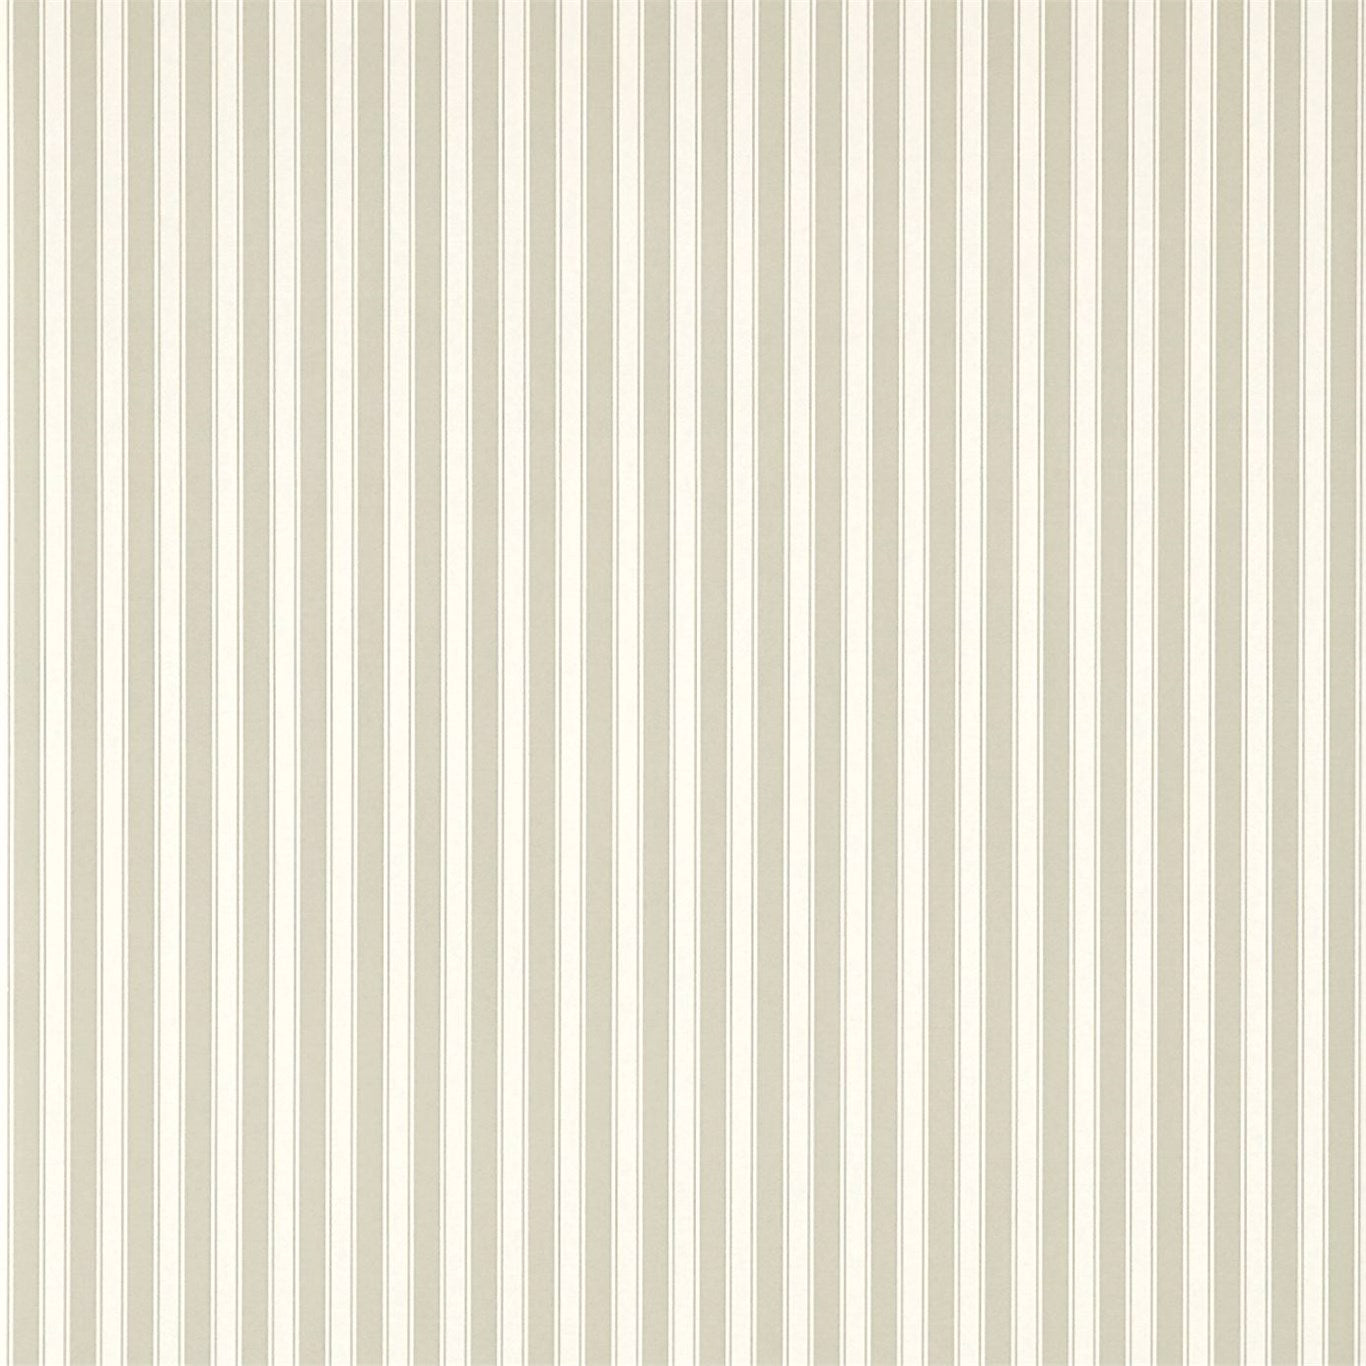 New Tiger Stripe Linen/Calico Wallpaper DCAVTP107 by Sanderson